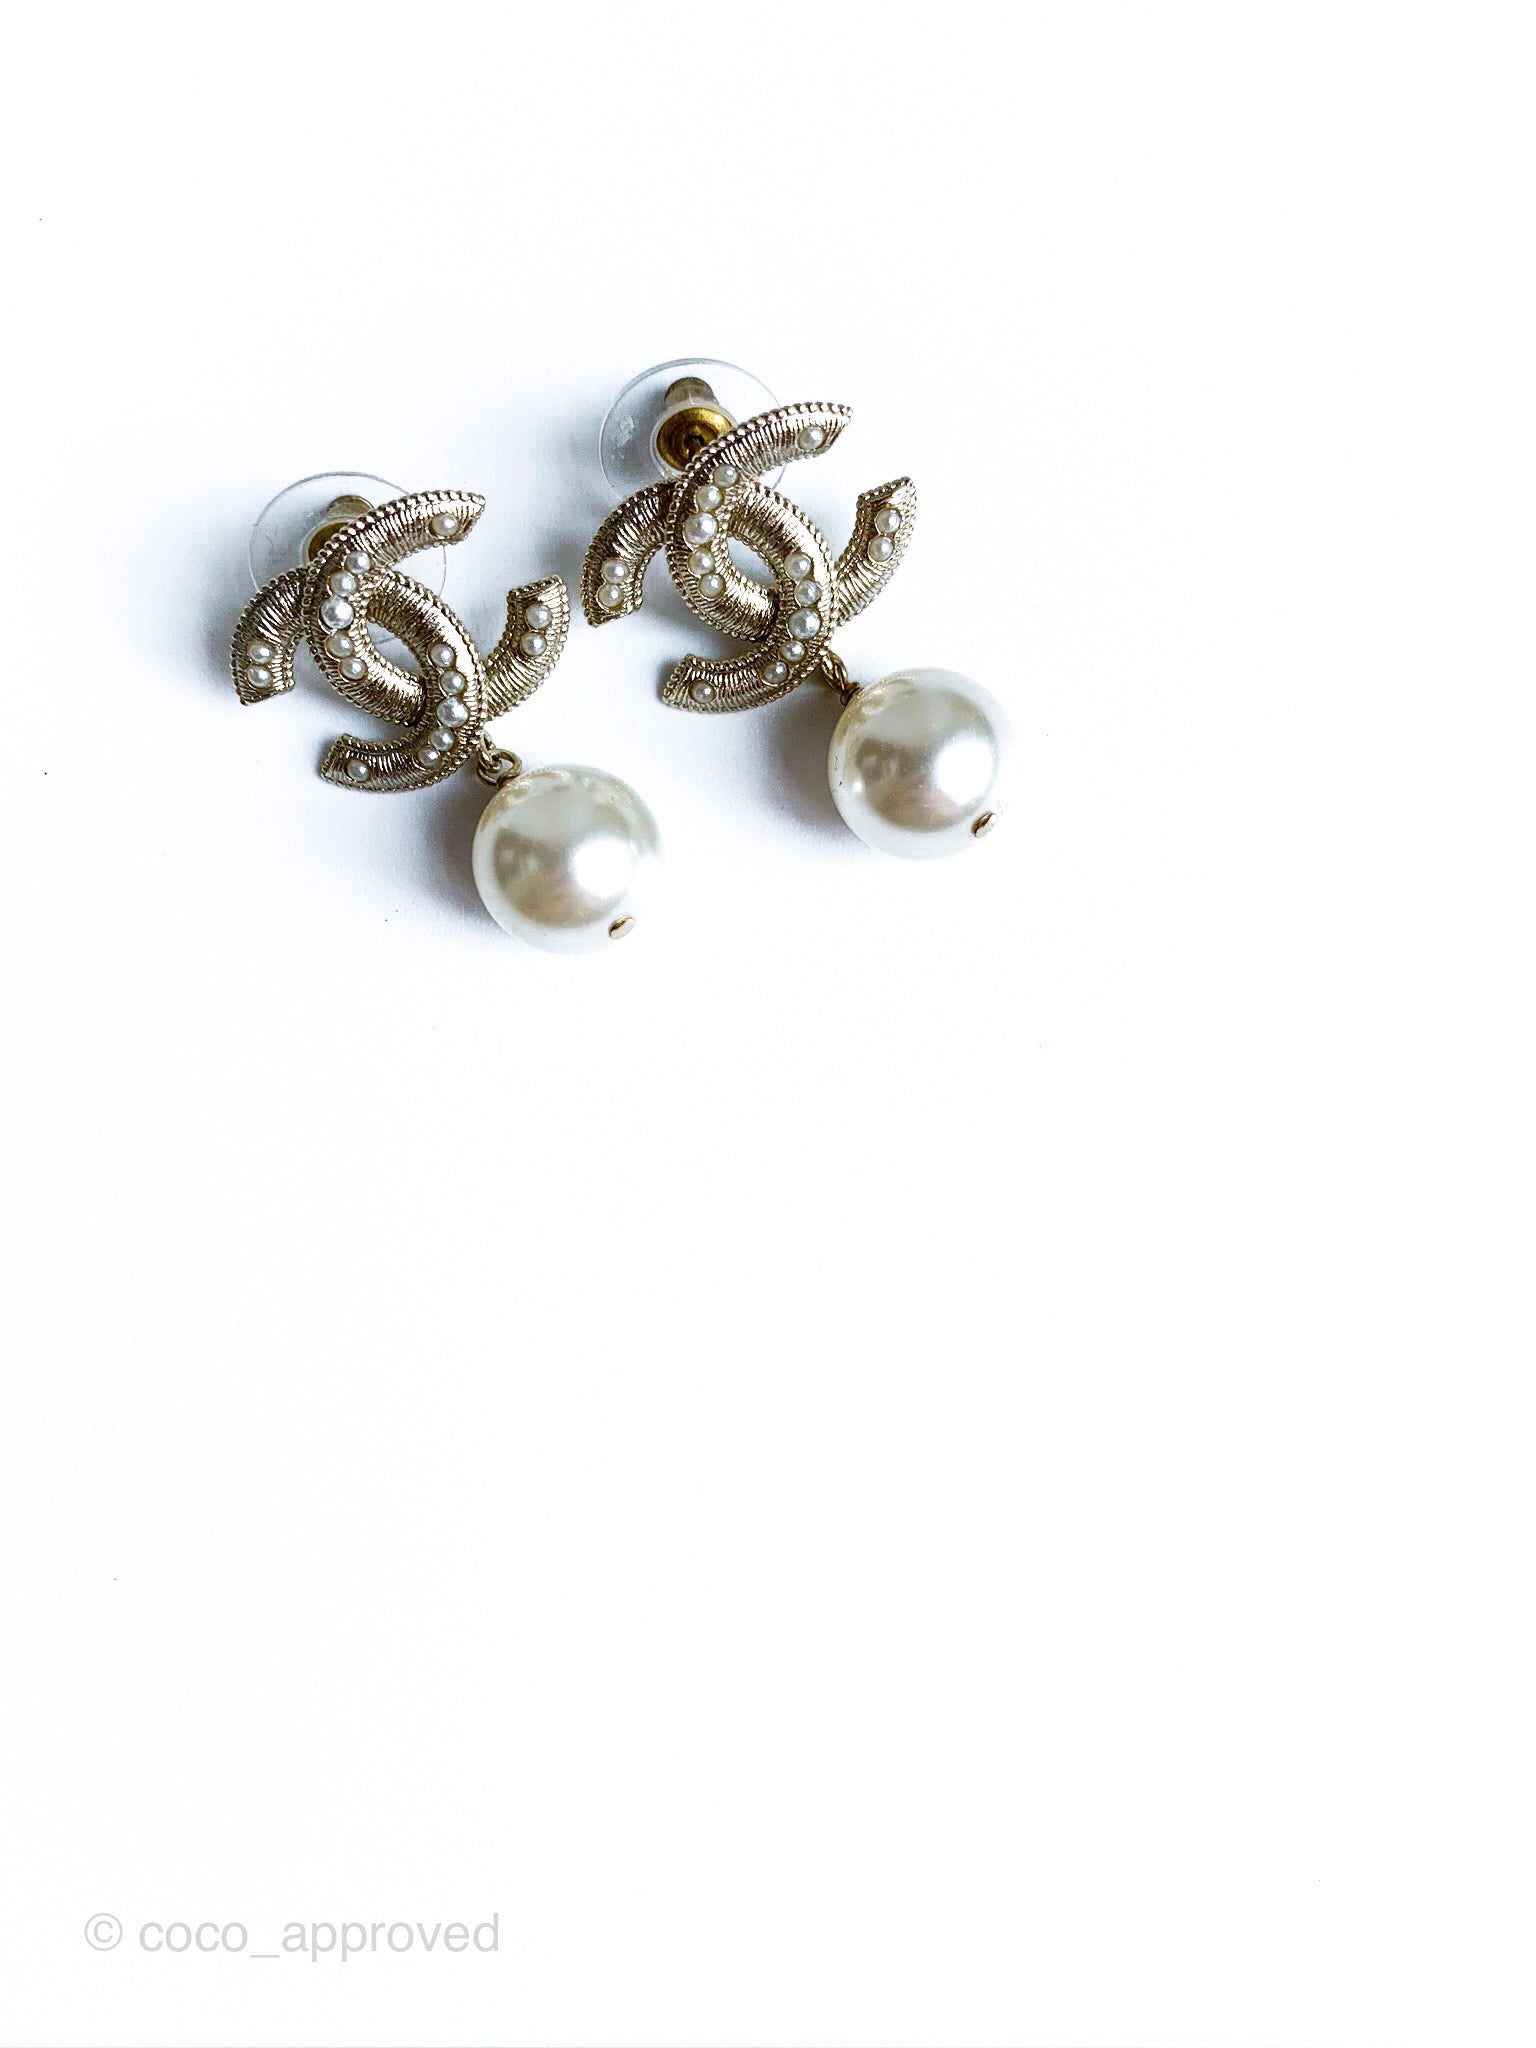 Authentic Chanel Pearl Drop Earrings | Chanel pearls, Pearl drop earrings, Chanel  pearl earrings